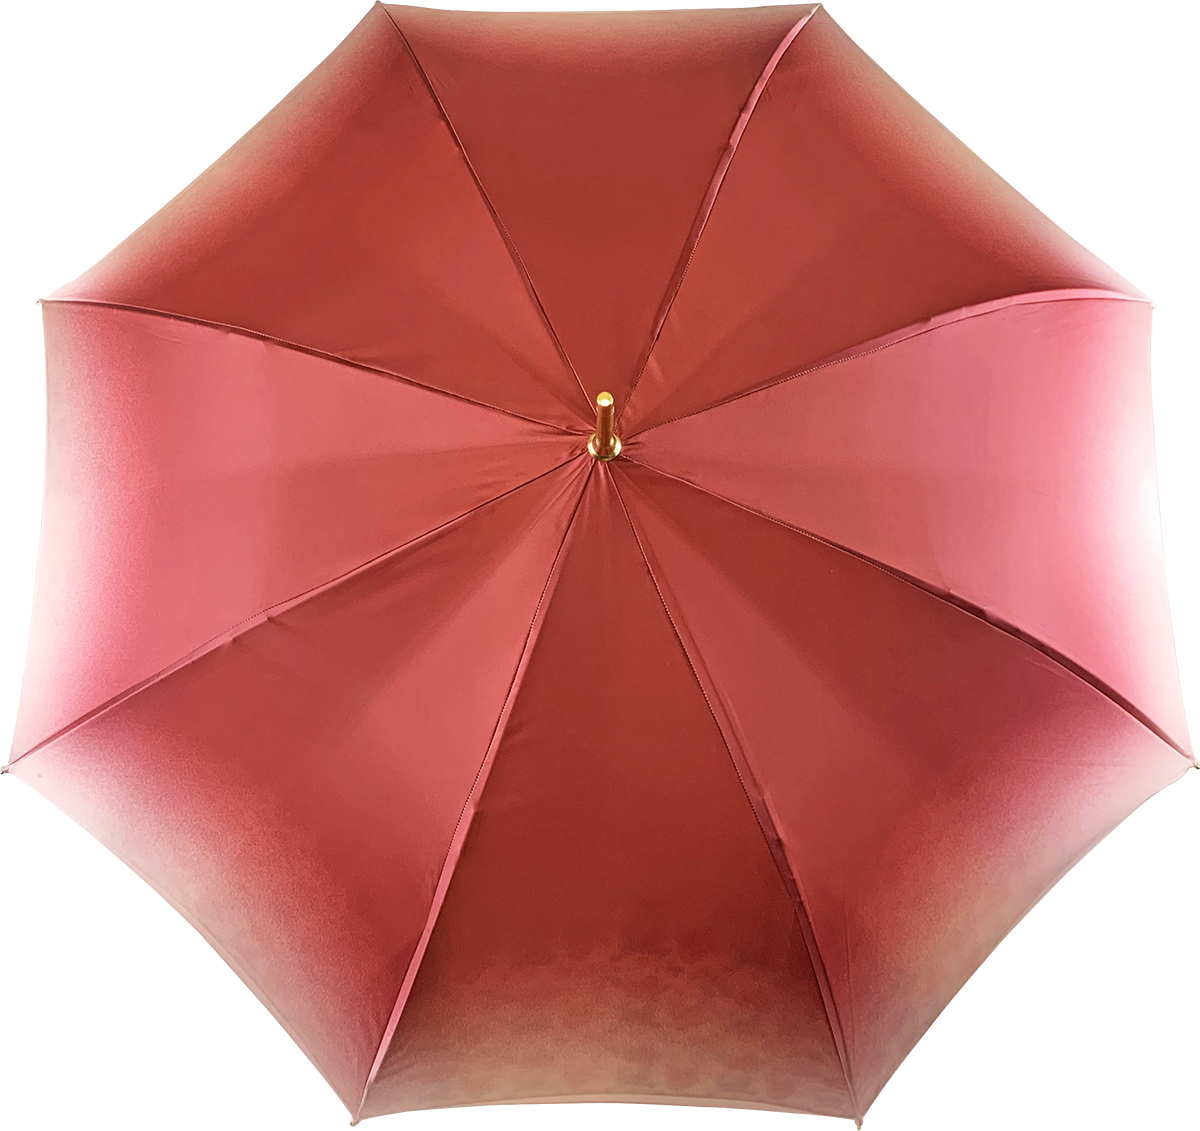 Romantic Umbrella with Heart handle